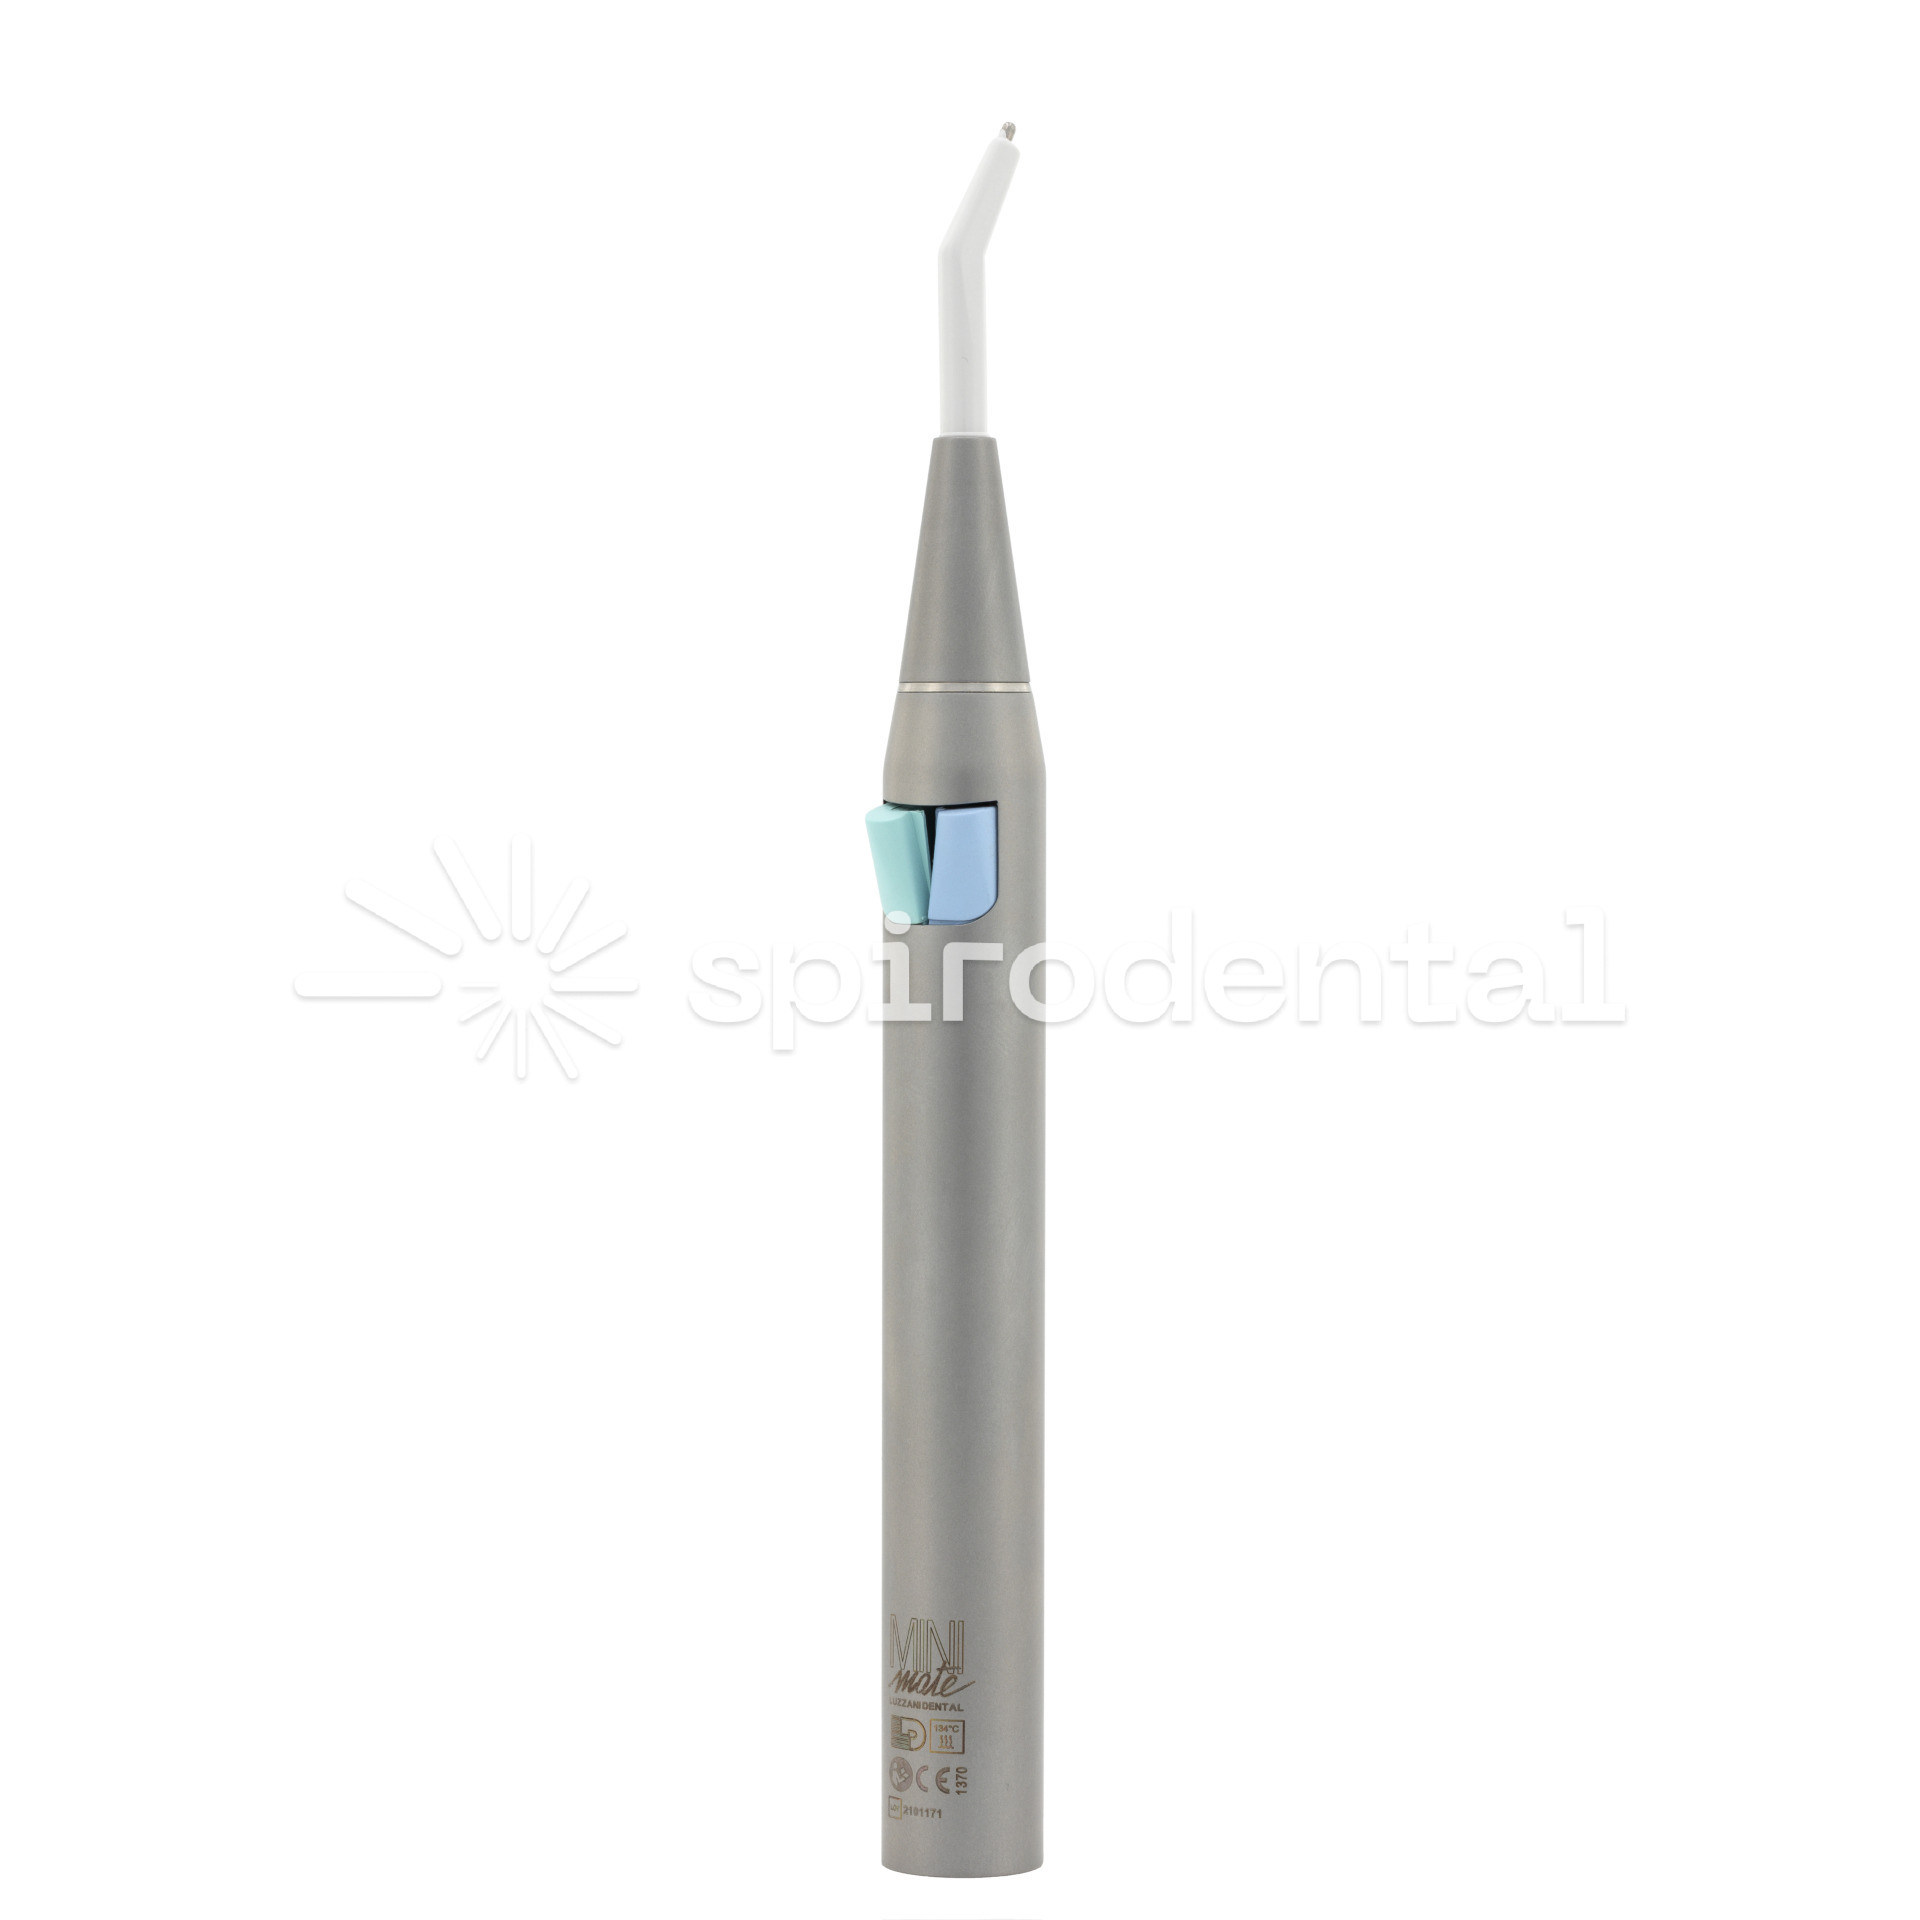 Hose with Straight Inox LUZZANI Minimate 3F syringe fits CEFLA® units